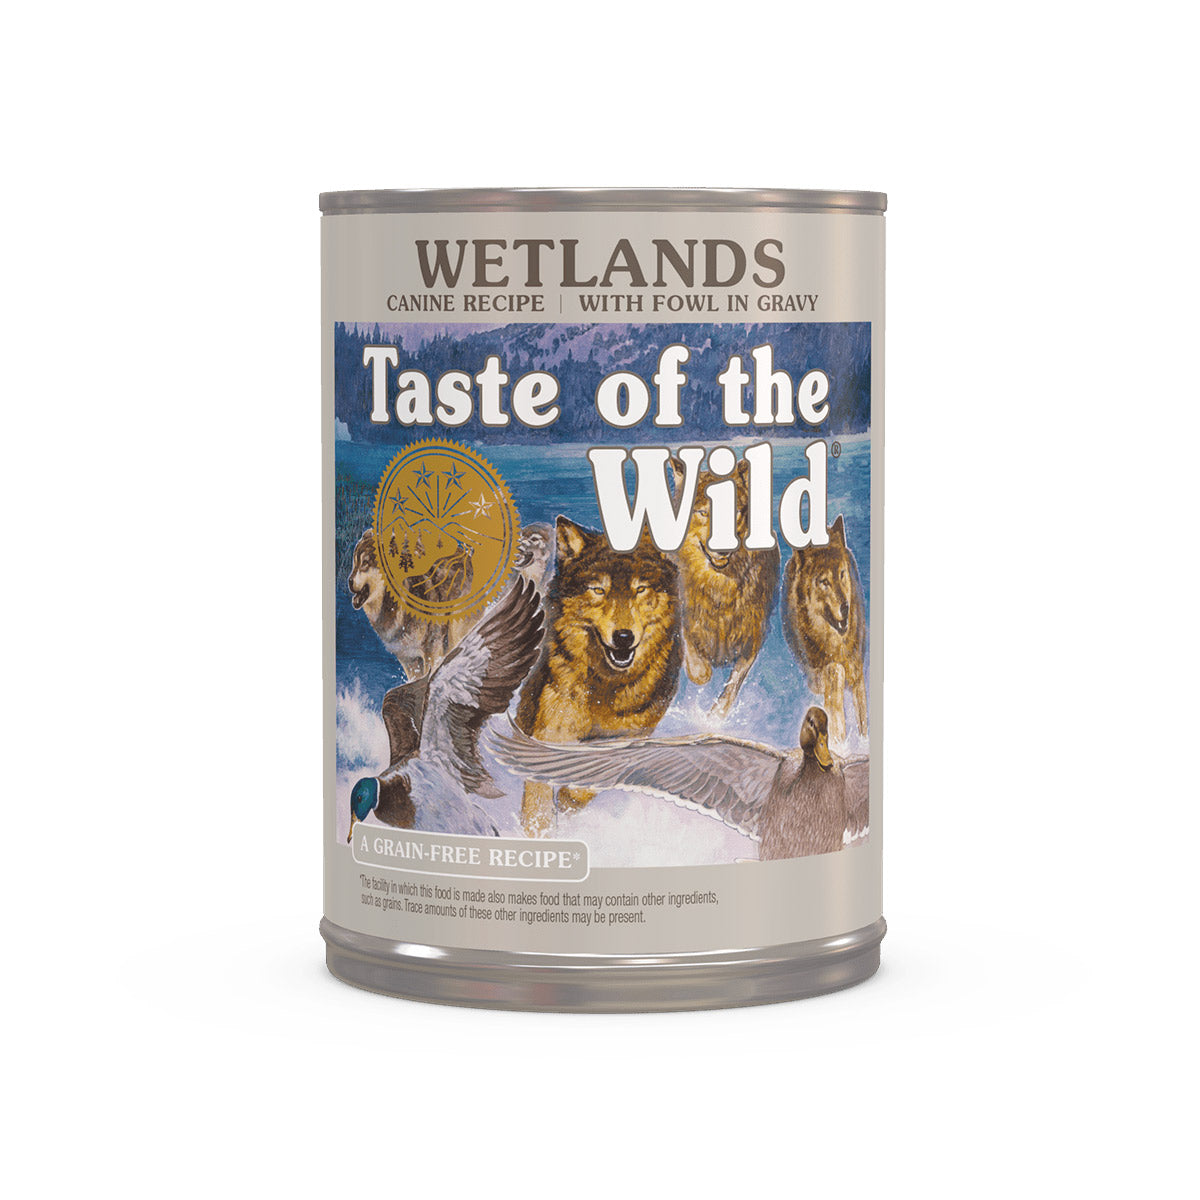 The Taste Of The Wild - Wetlands Canine Formula 390gr